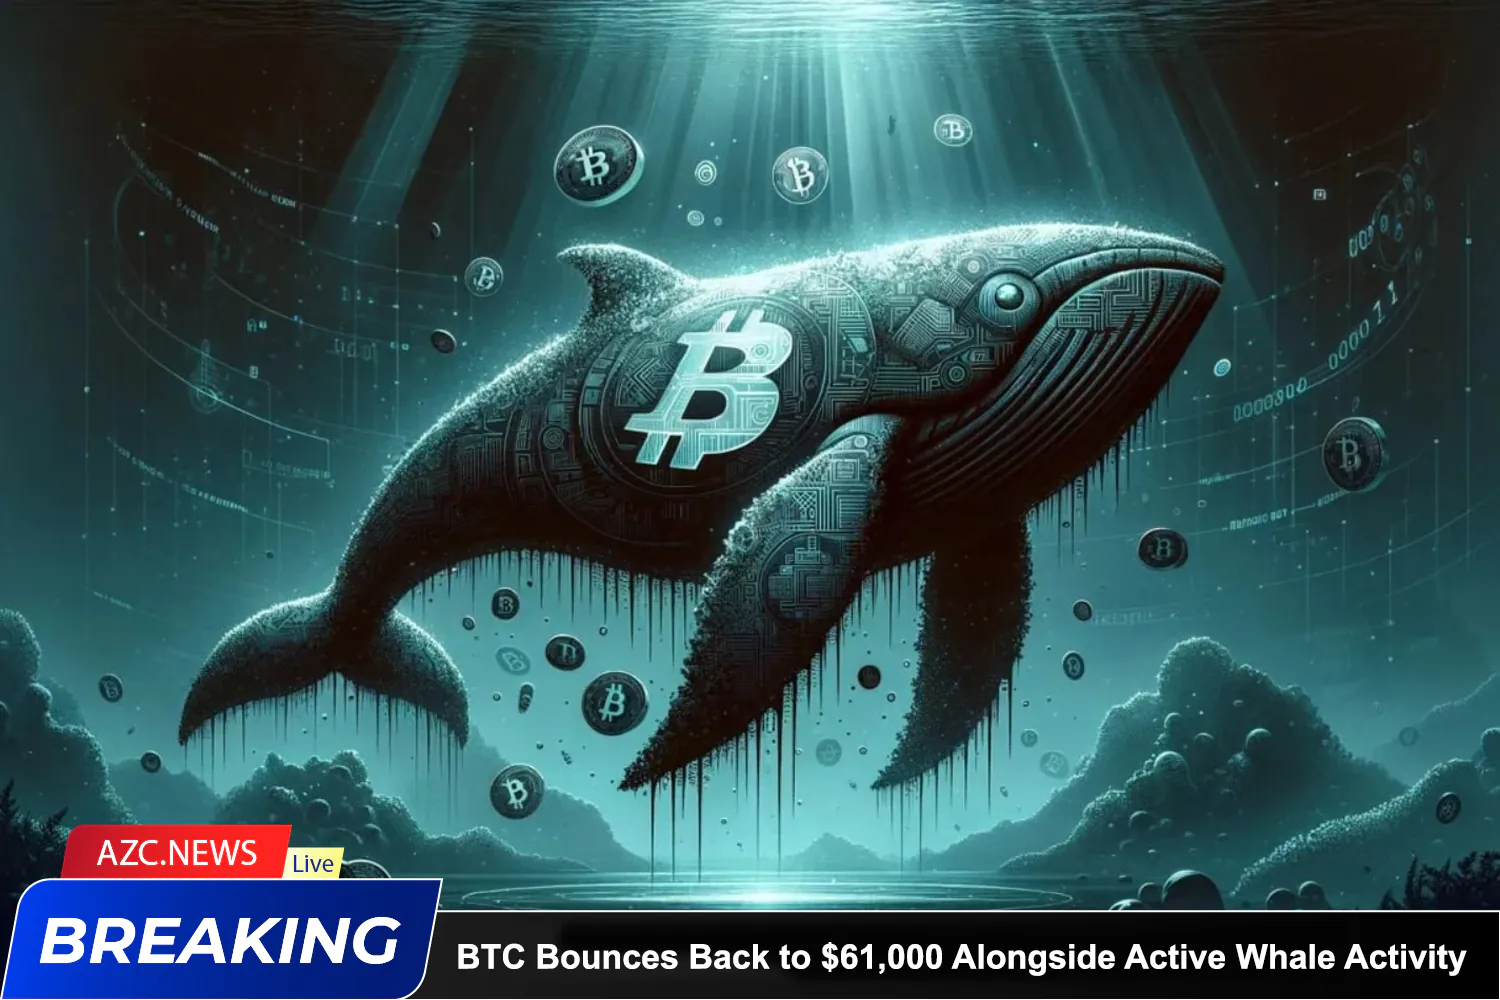 Azcnews Bitcoin Bounces Back To $61,000 Alongside Active Whale Activity